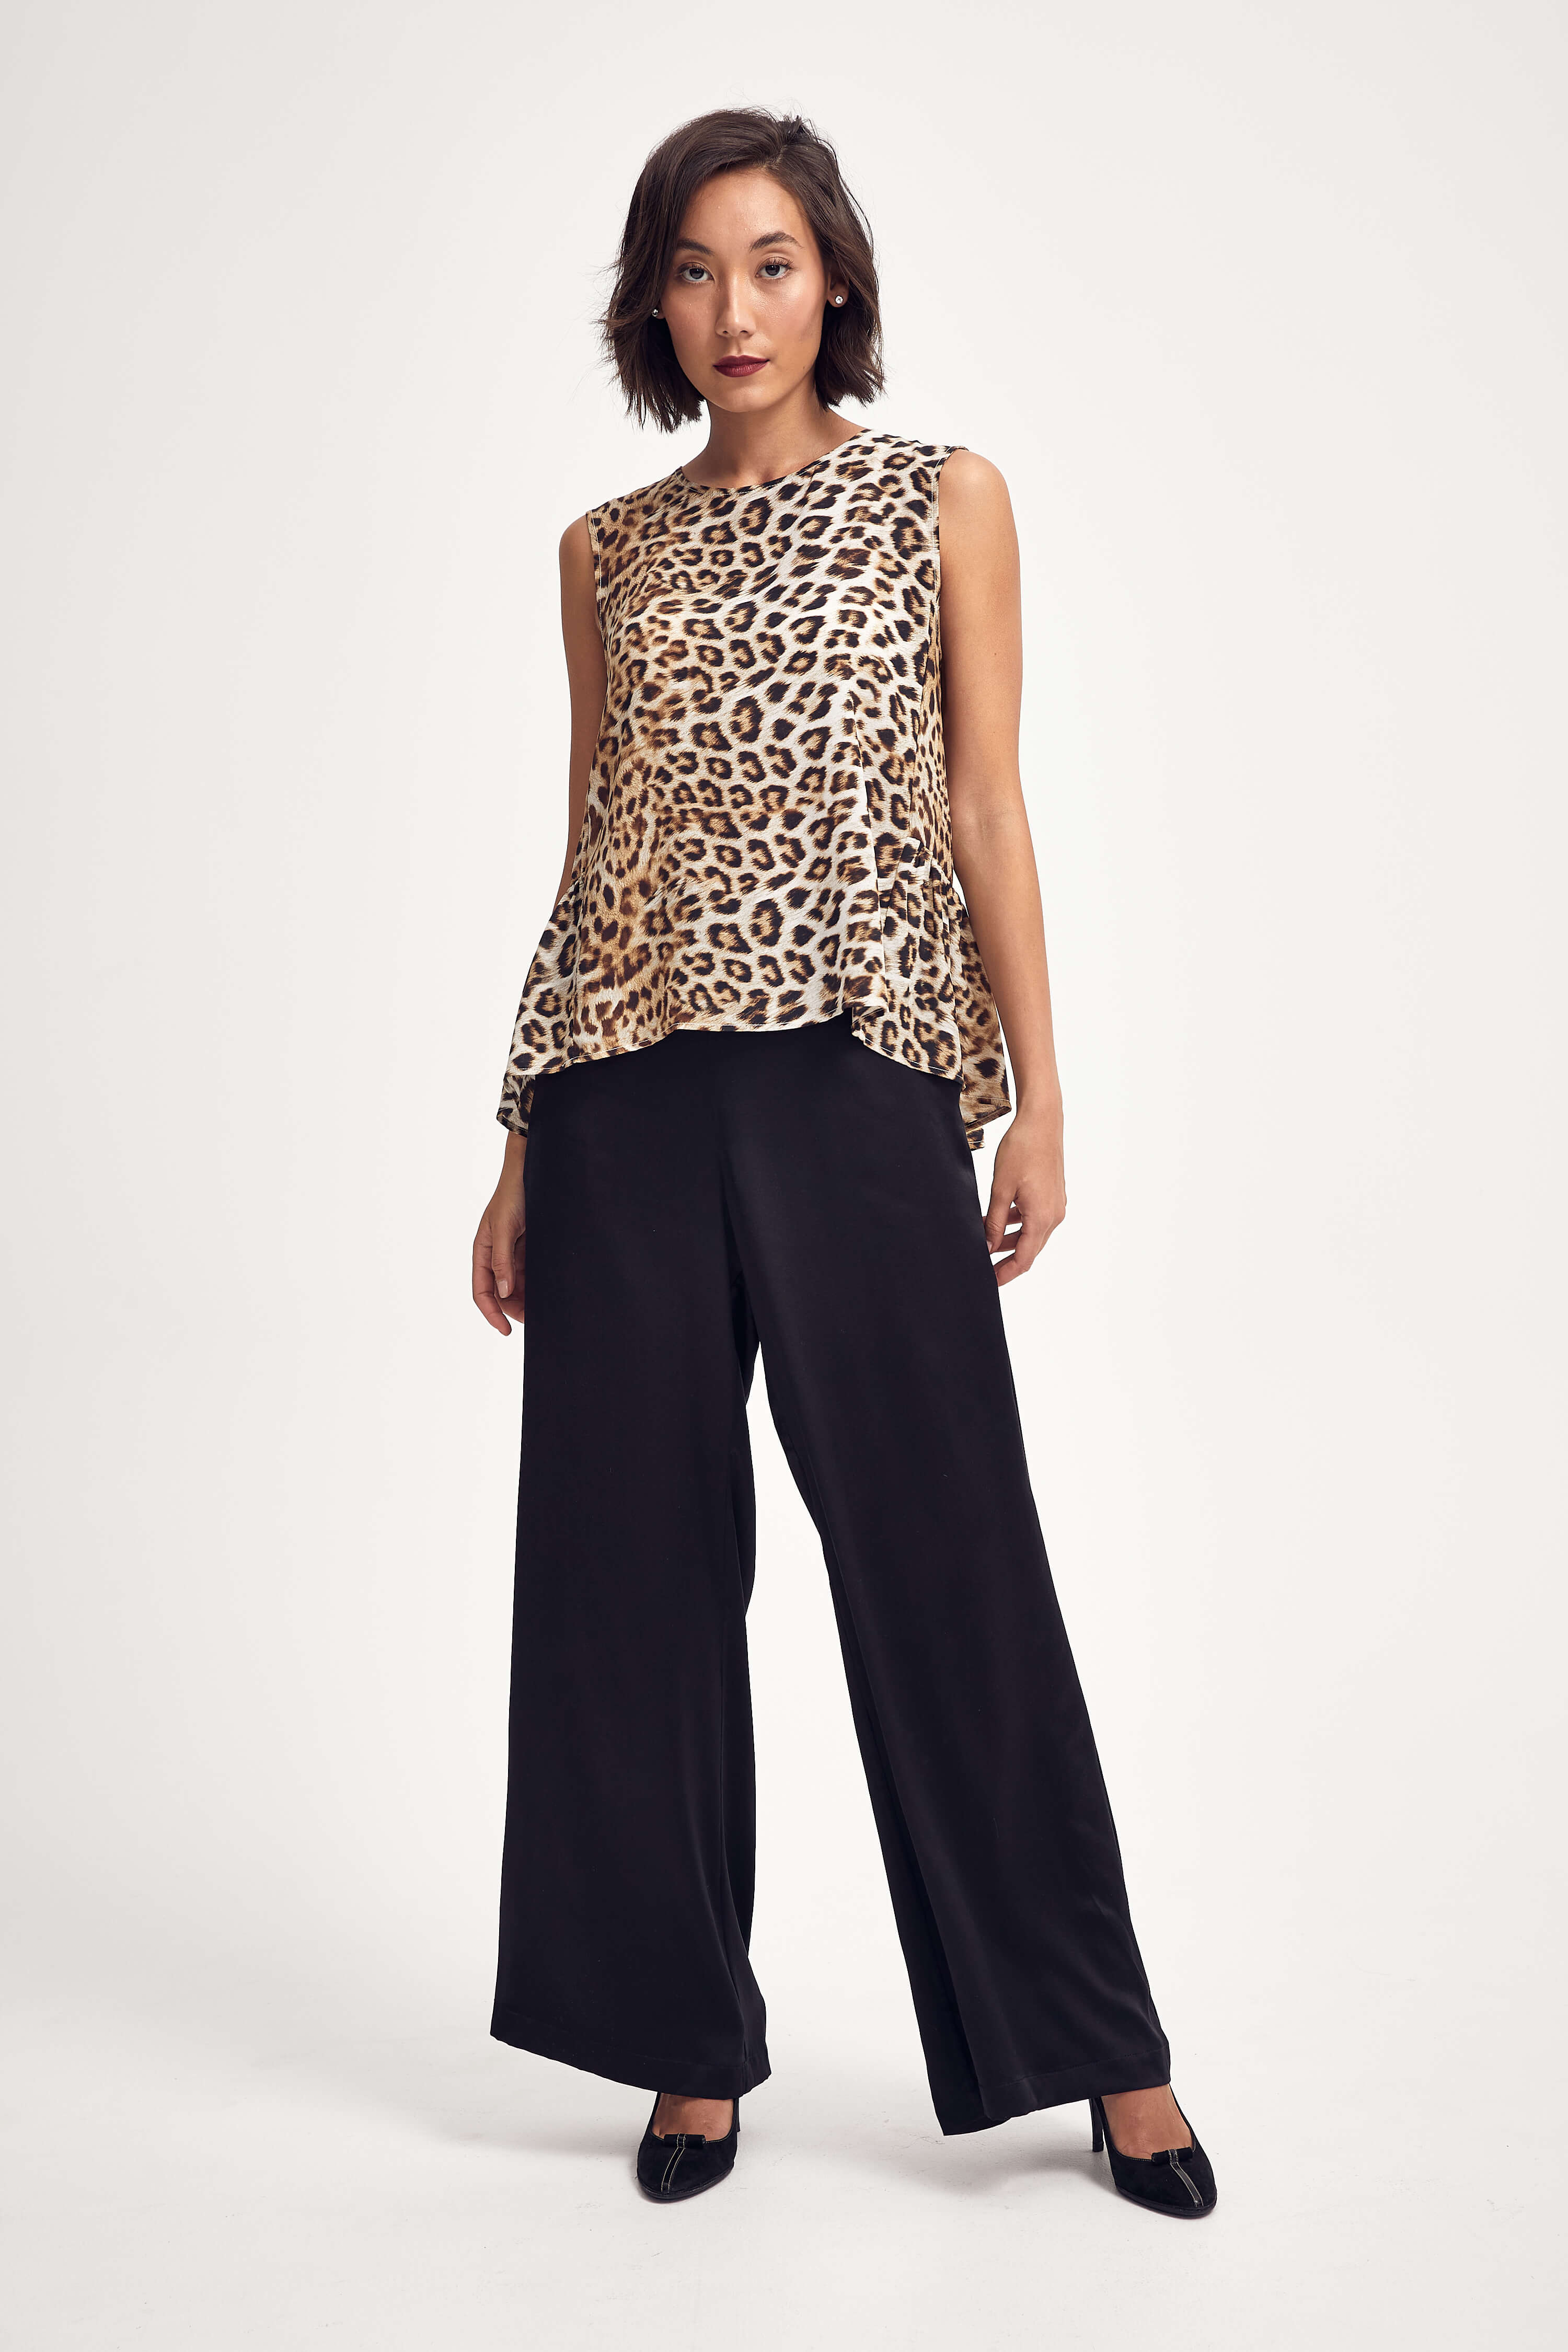 Silk Peplum Top in Leopard – Lindsay Nicholas New York